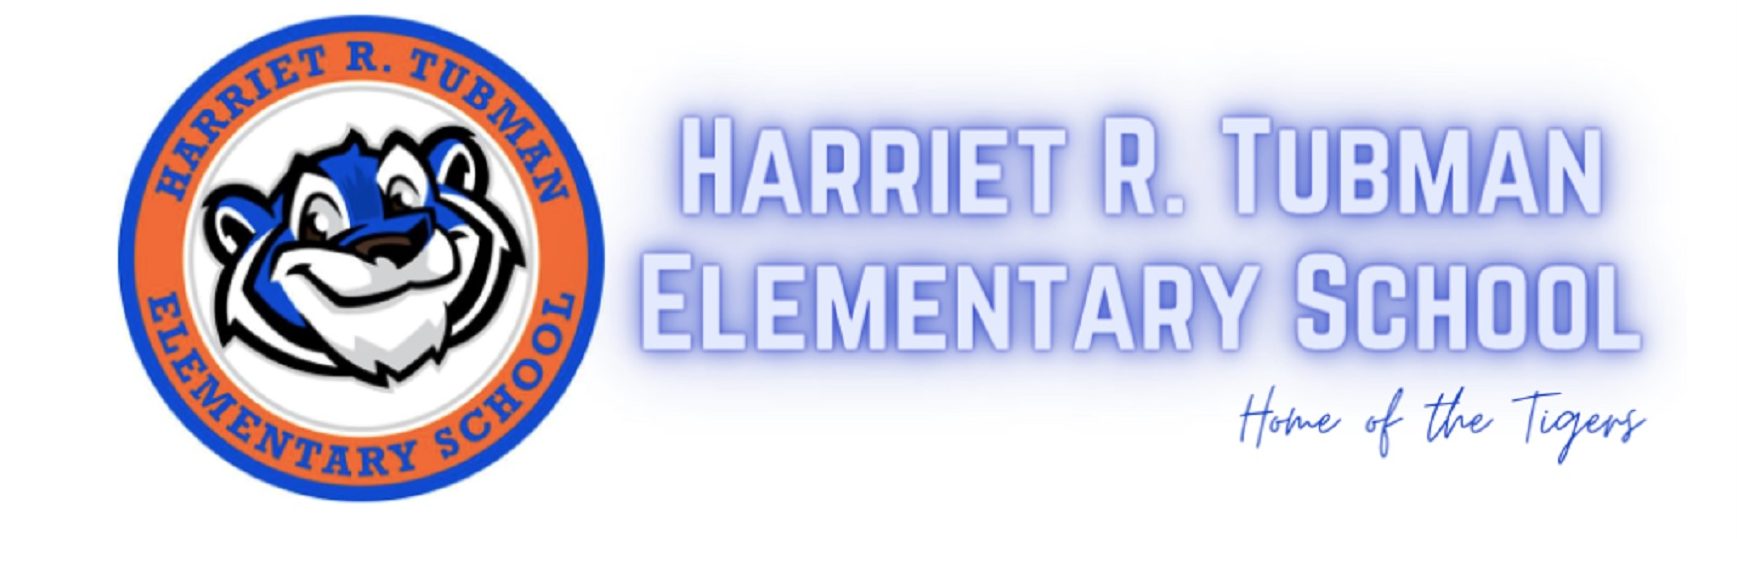 Harriet R. Tubman Elementary School- Main Logo2.png